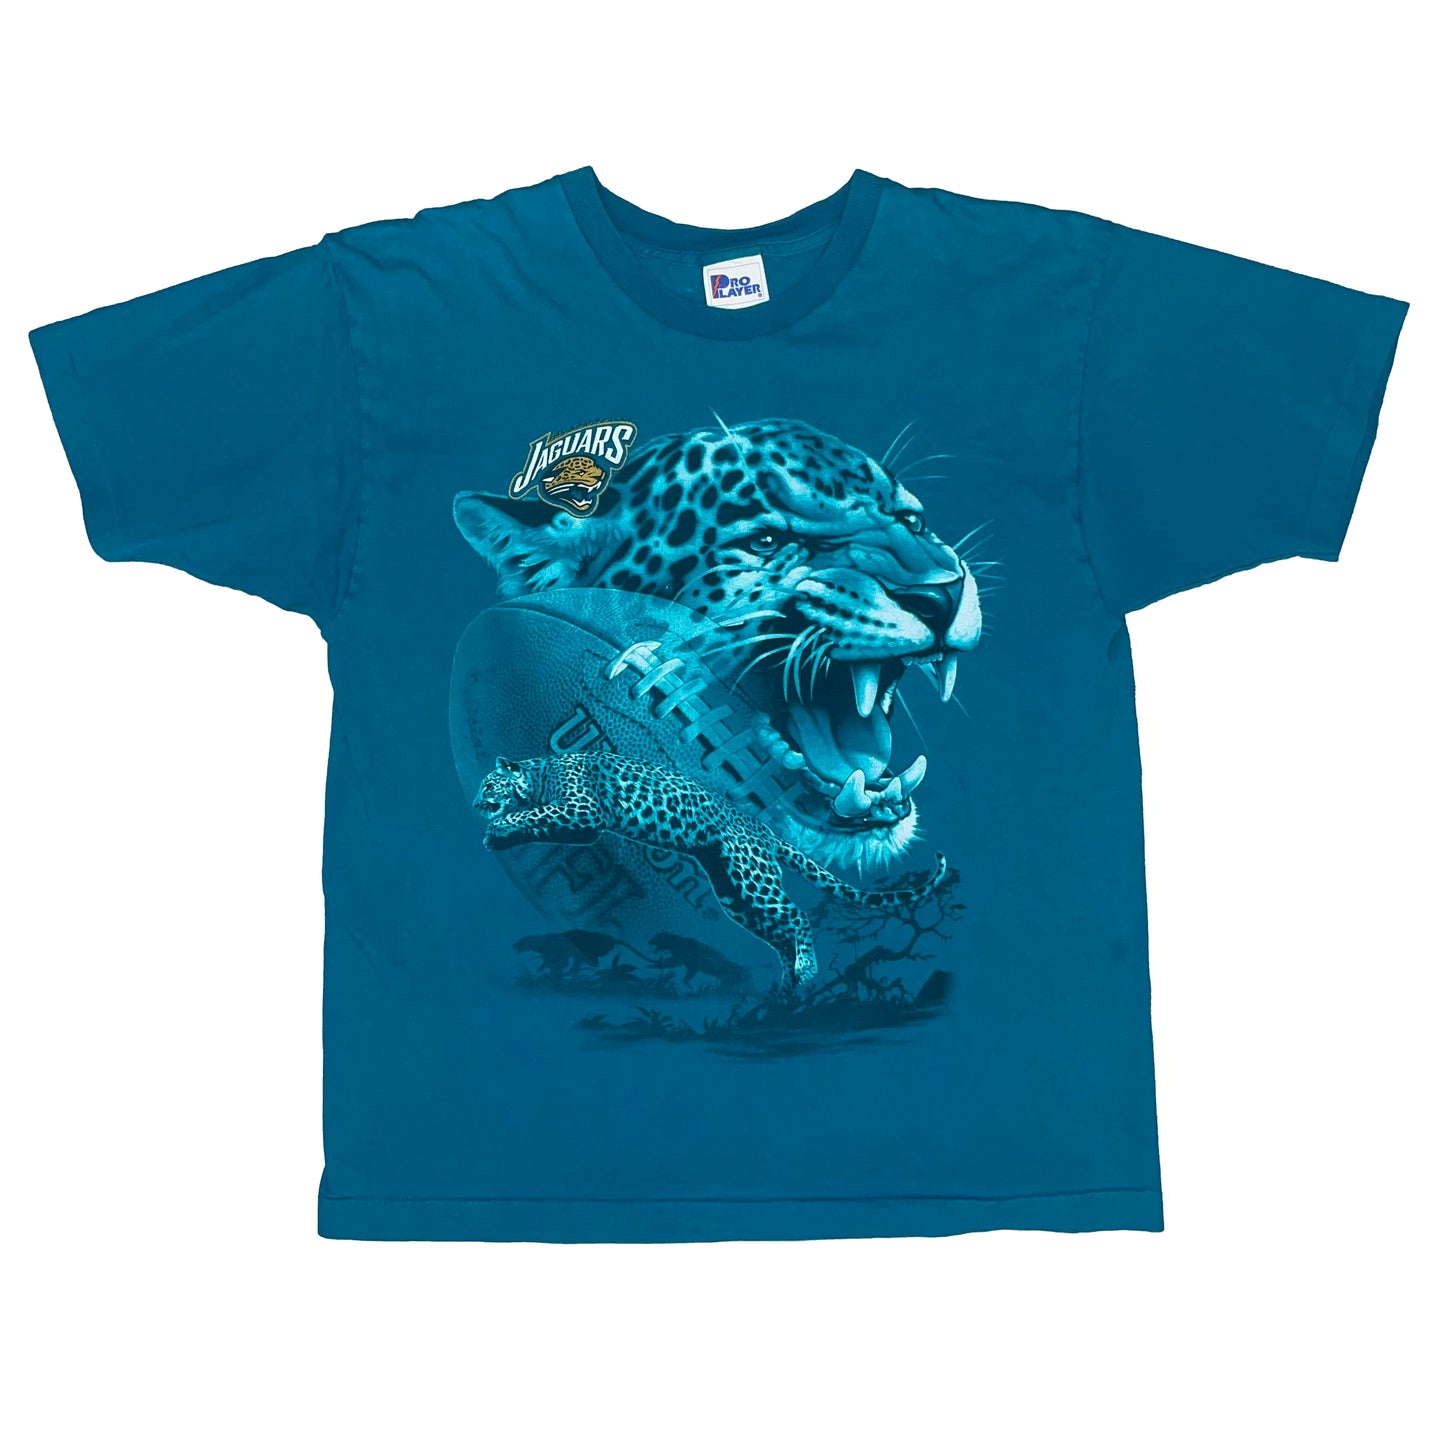 Jacksonville Jaguars graphic shirt LARGE